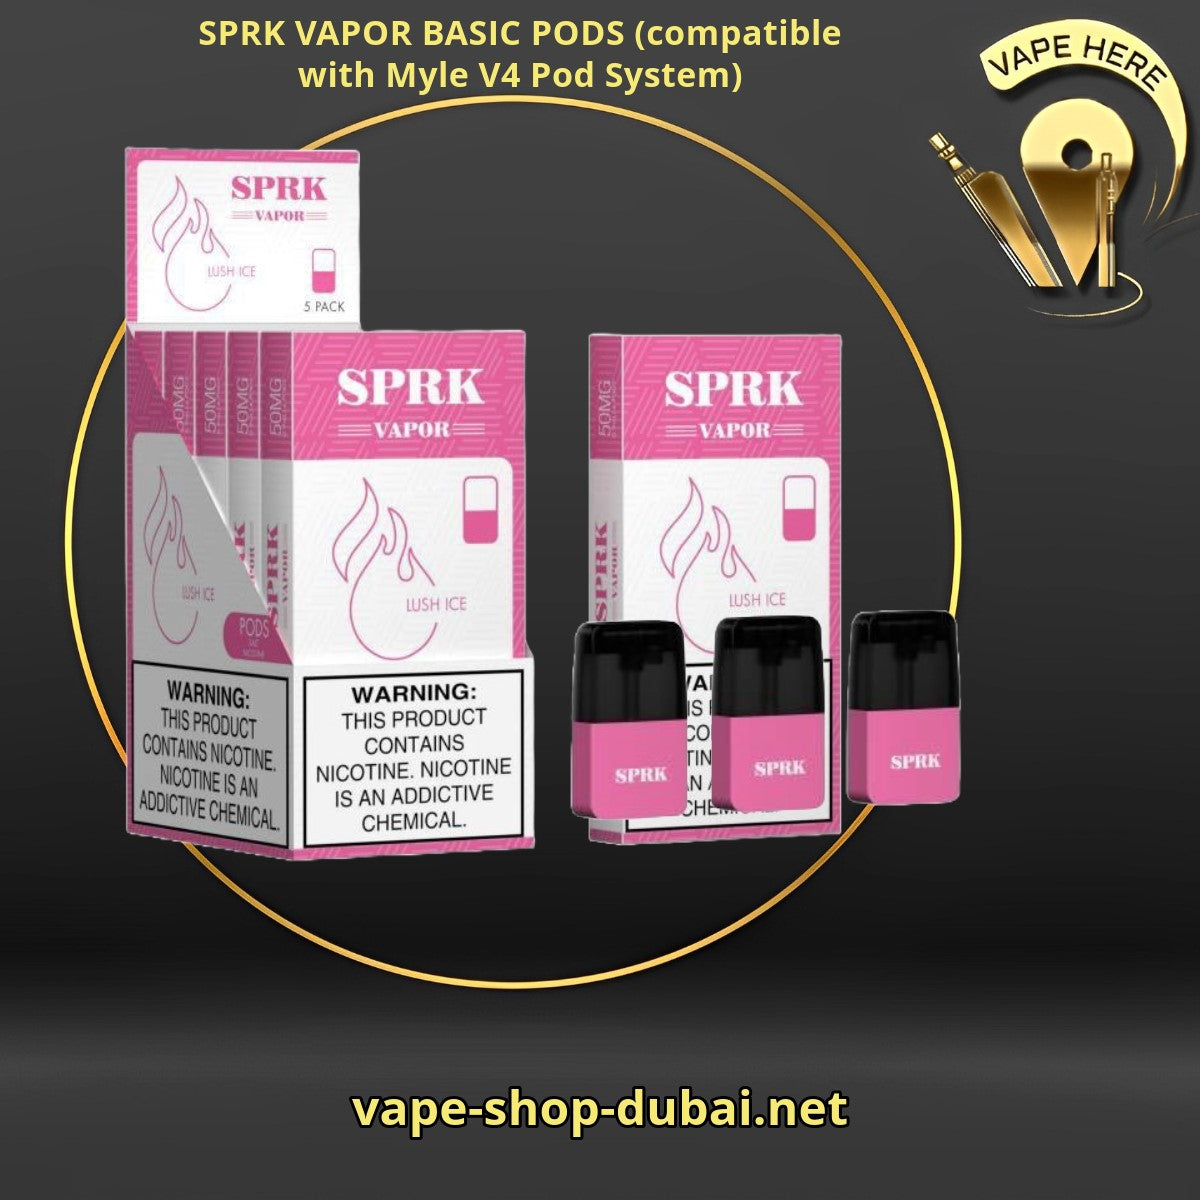 SPRK VAPOR BASIC PODS Lush Ice (compatible with Myle V4 Pod System) UAE Dubai